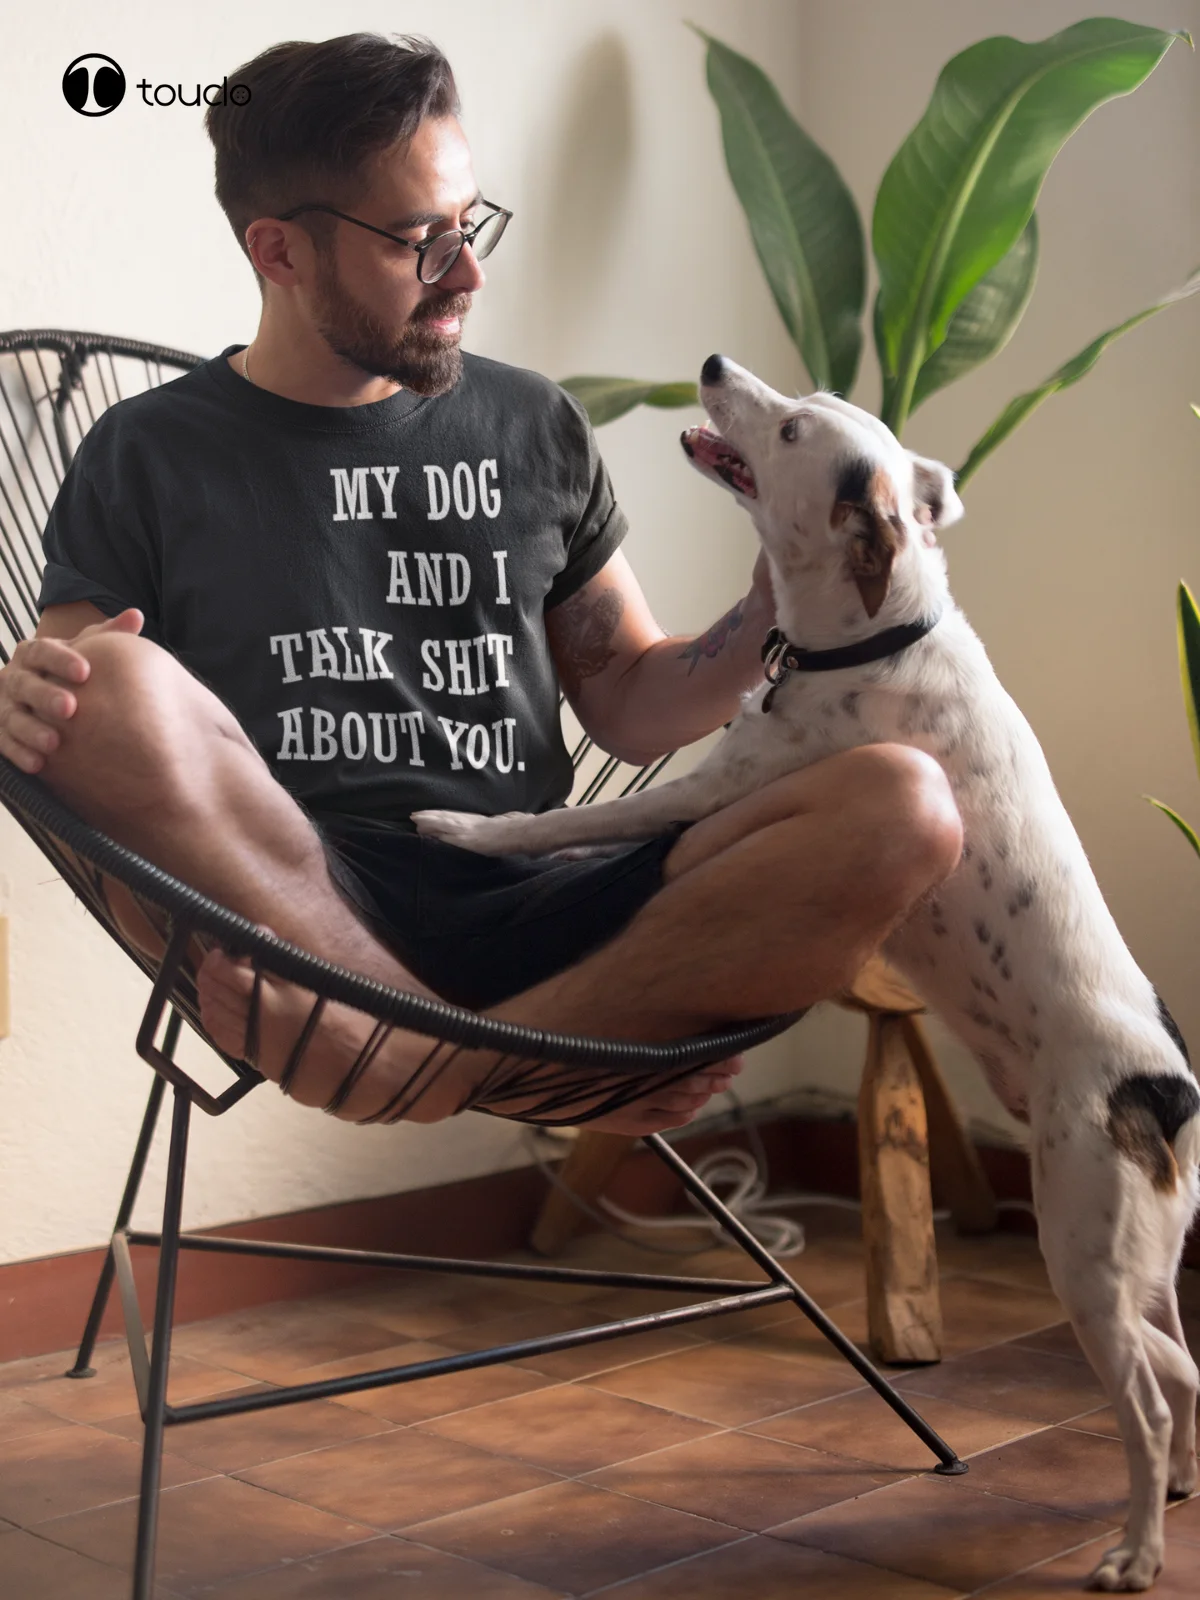 

My Dog And I Talk About You Funny Dog Owner T-Shirt - Unisex Dog Pet Shirt Cotton Tee Shirt Unisex